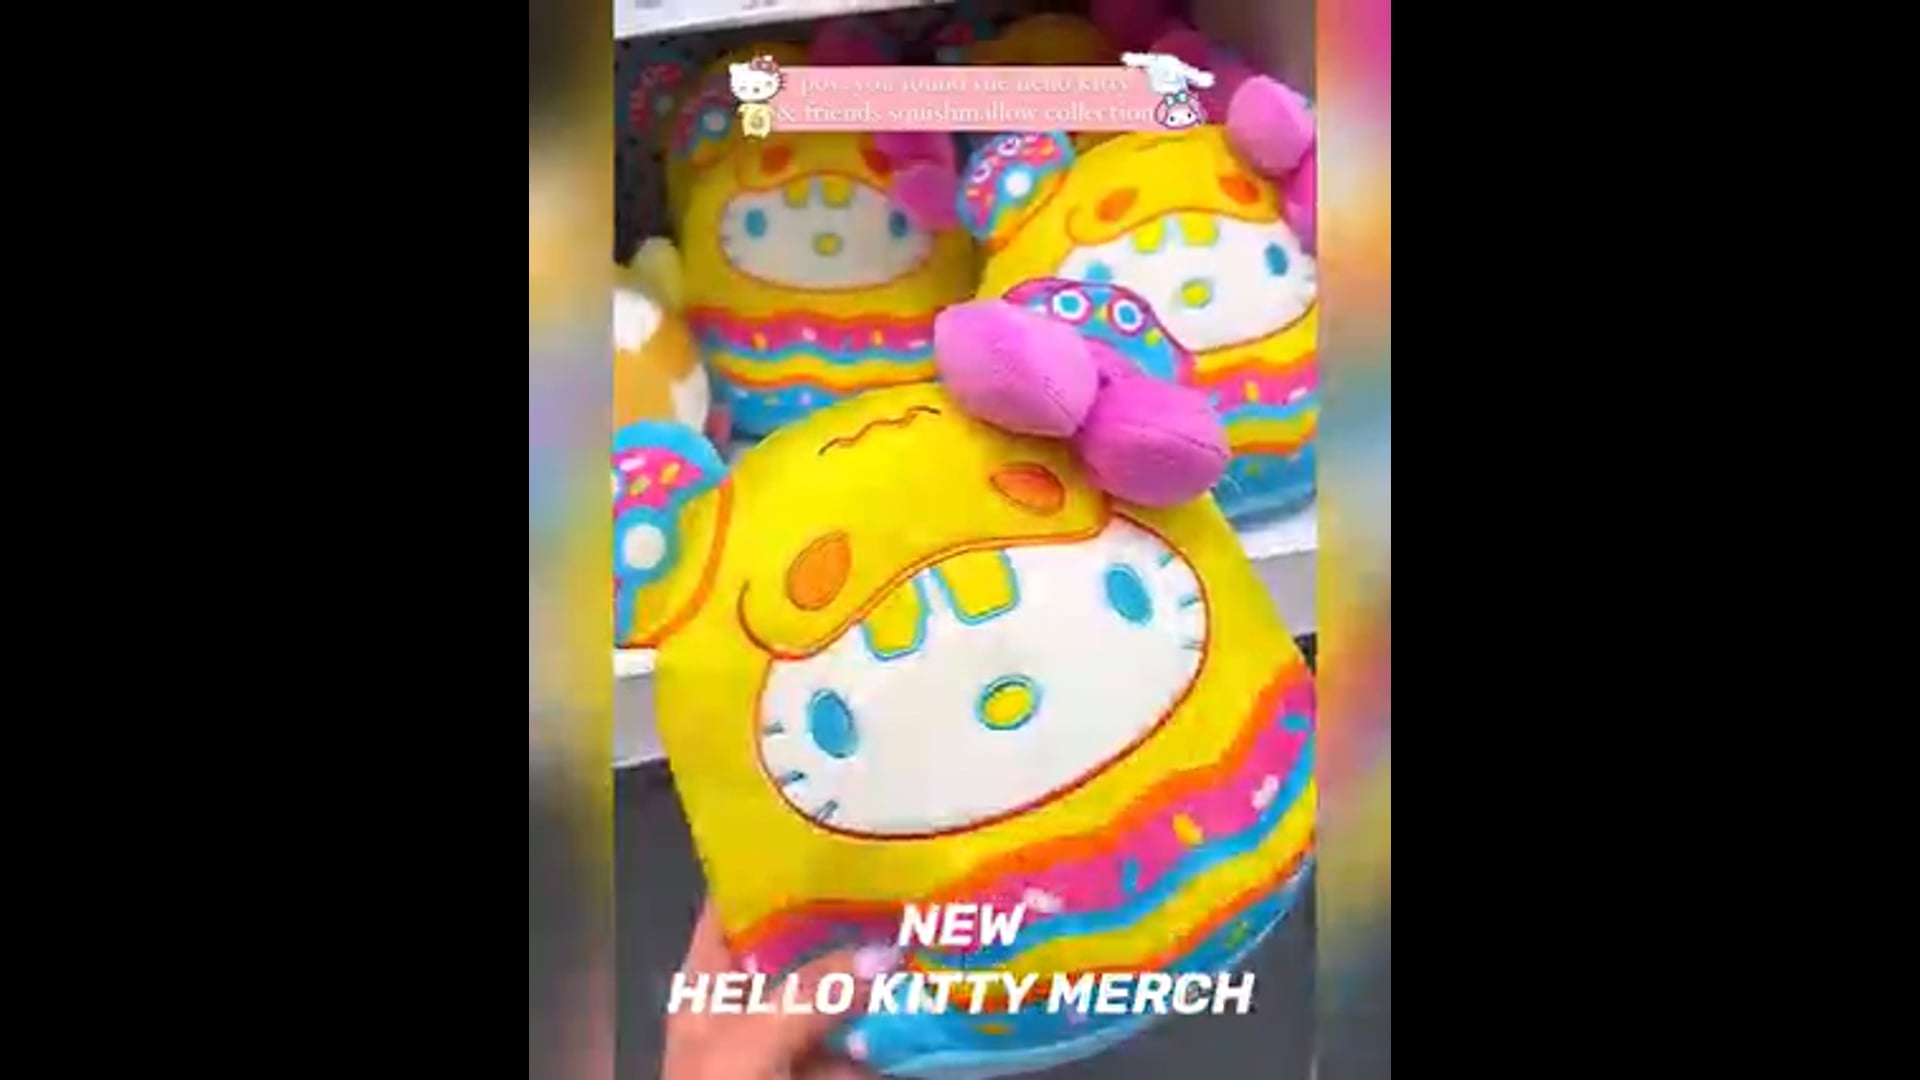  GUND Sanrio Hello Kitty Keroppi Plush Toy, Premium Stuffed  Animal for Ages 1 and Up, Green, 9.5 : Toys & Games